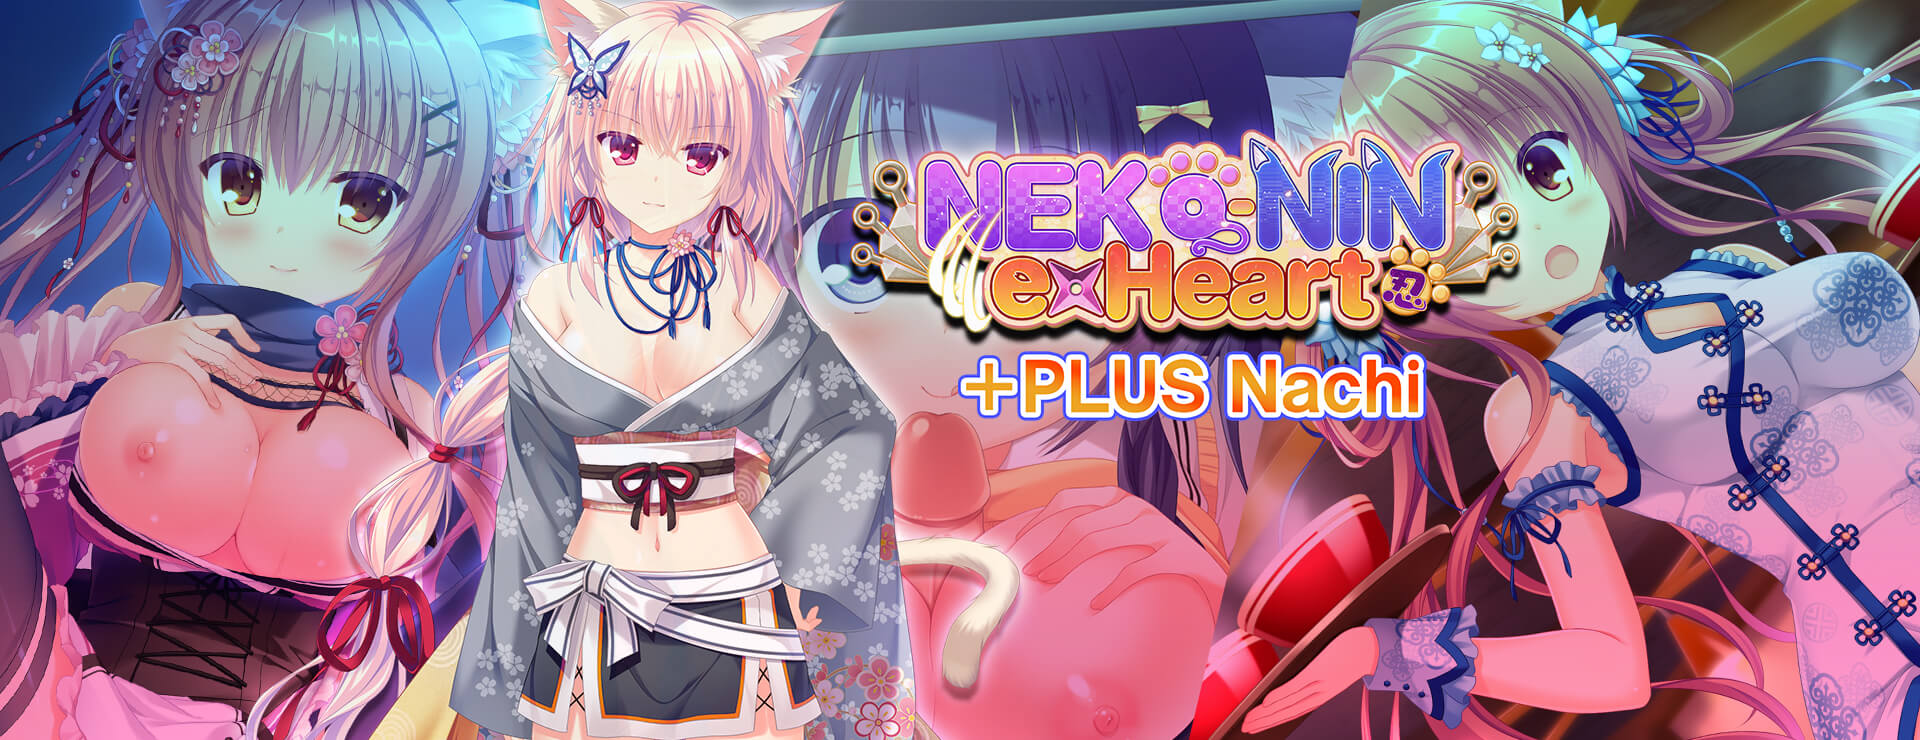 NEKO-NIN exHeart +PLUS Nachi (DLC Part 1) - ビジュアルノベル ゲーム